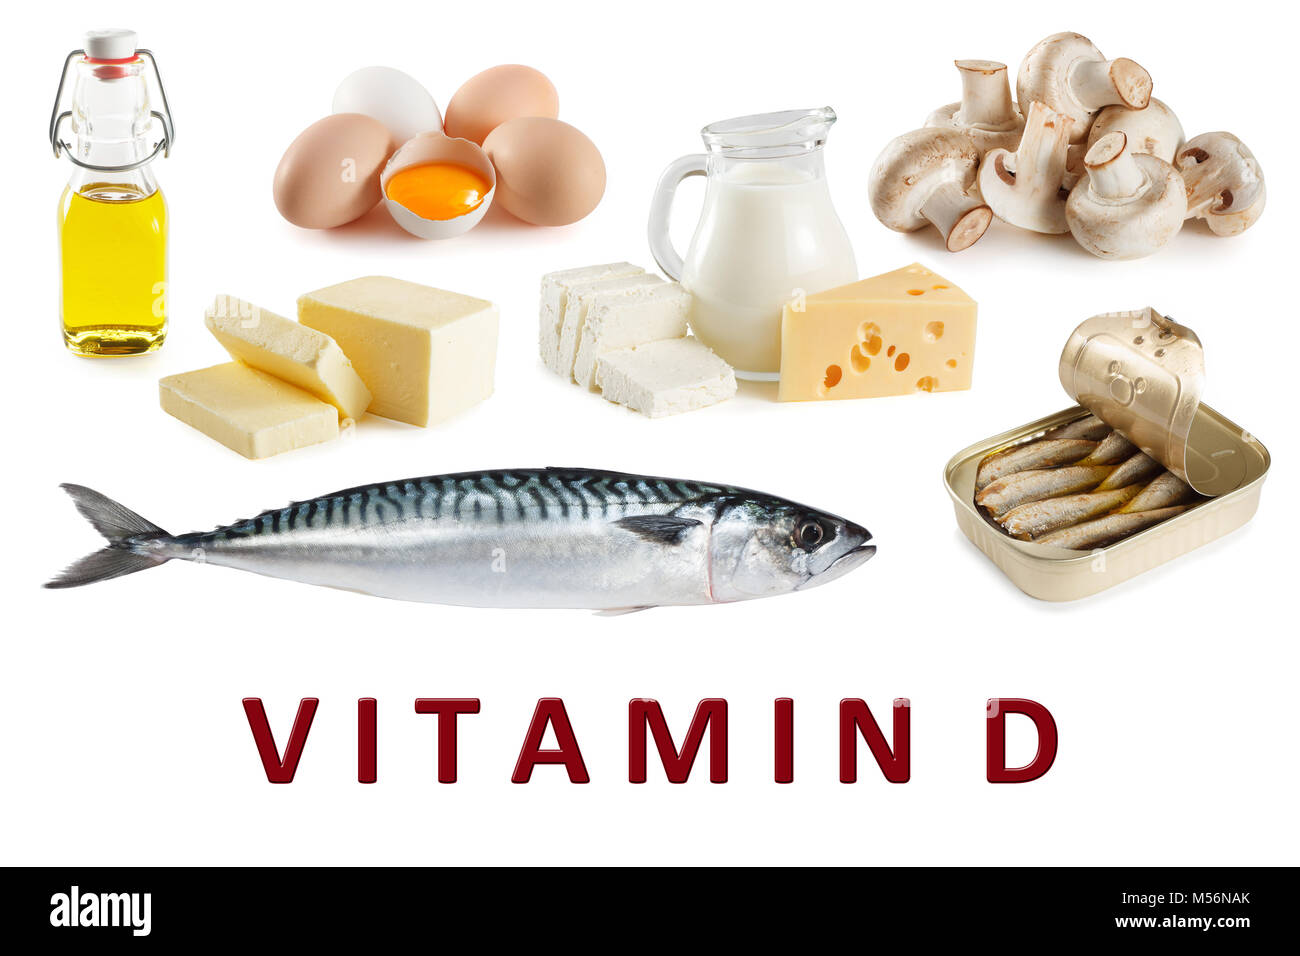 Lebensmittel, die reich an natürlichem Vitamin D wie Makrele, Eier, Käse, Milch, Butter, Pilze, Sardinen, Lebertran Stockfoto